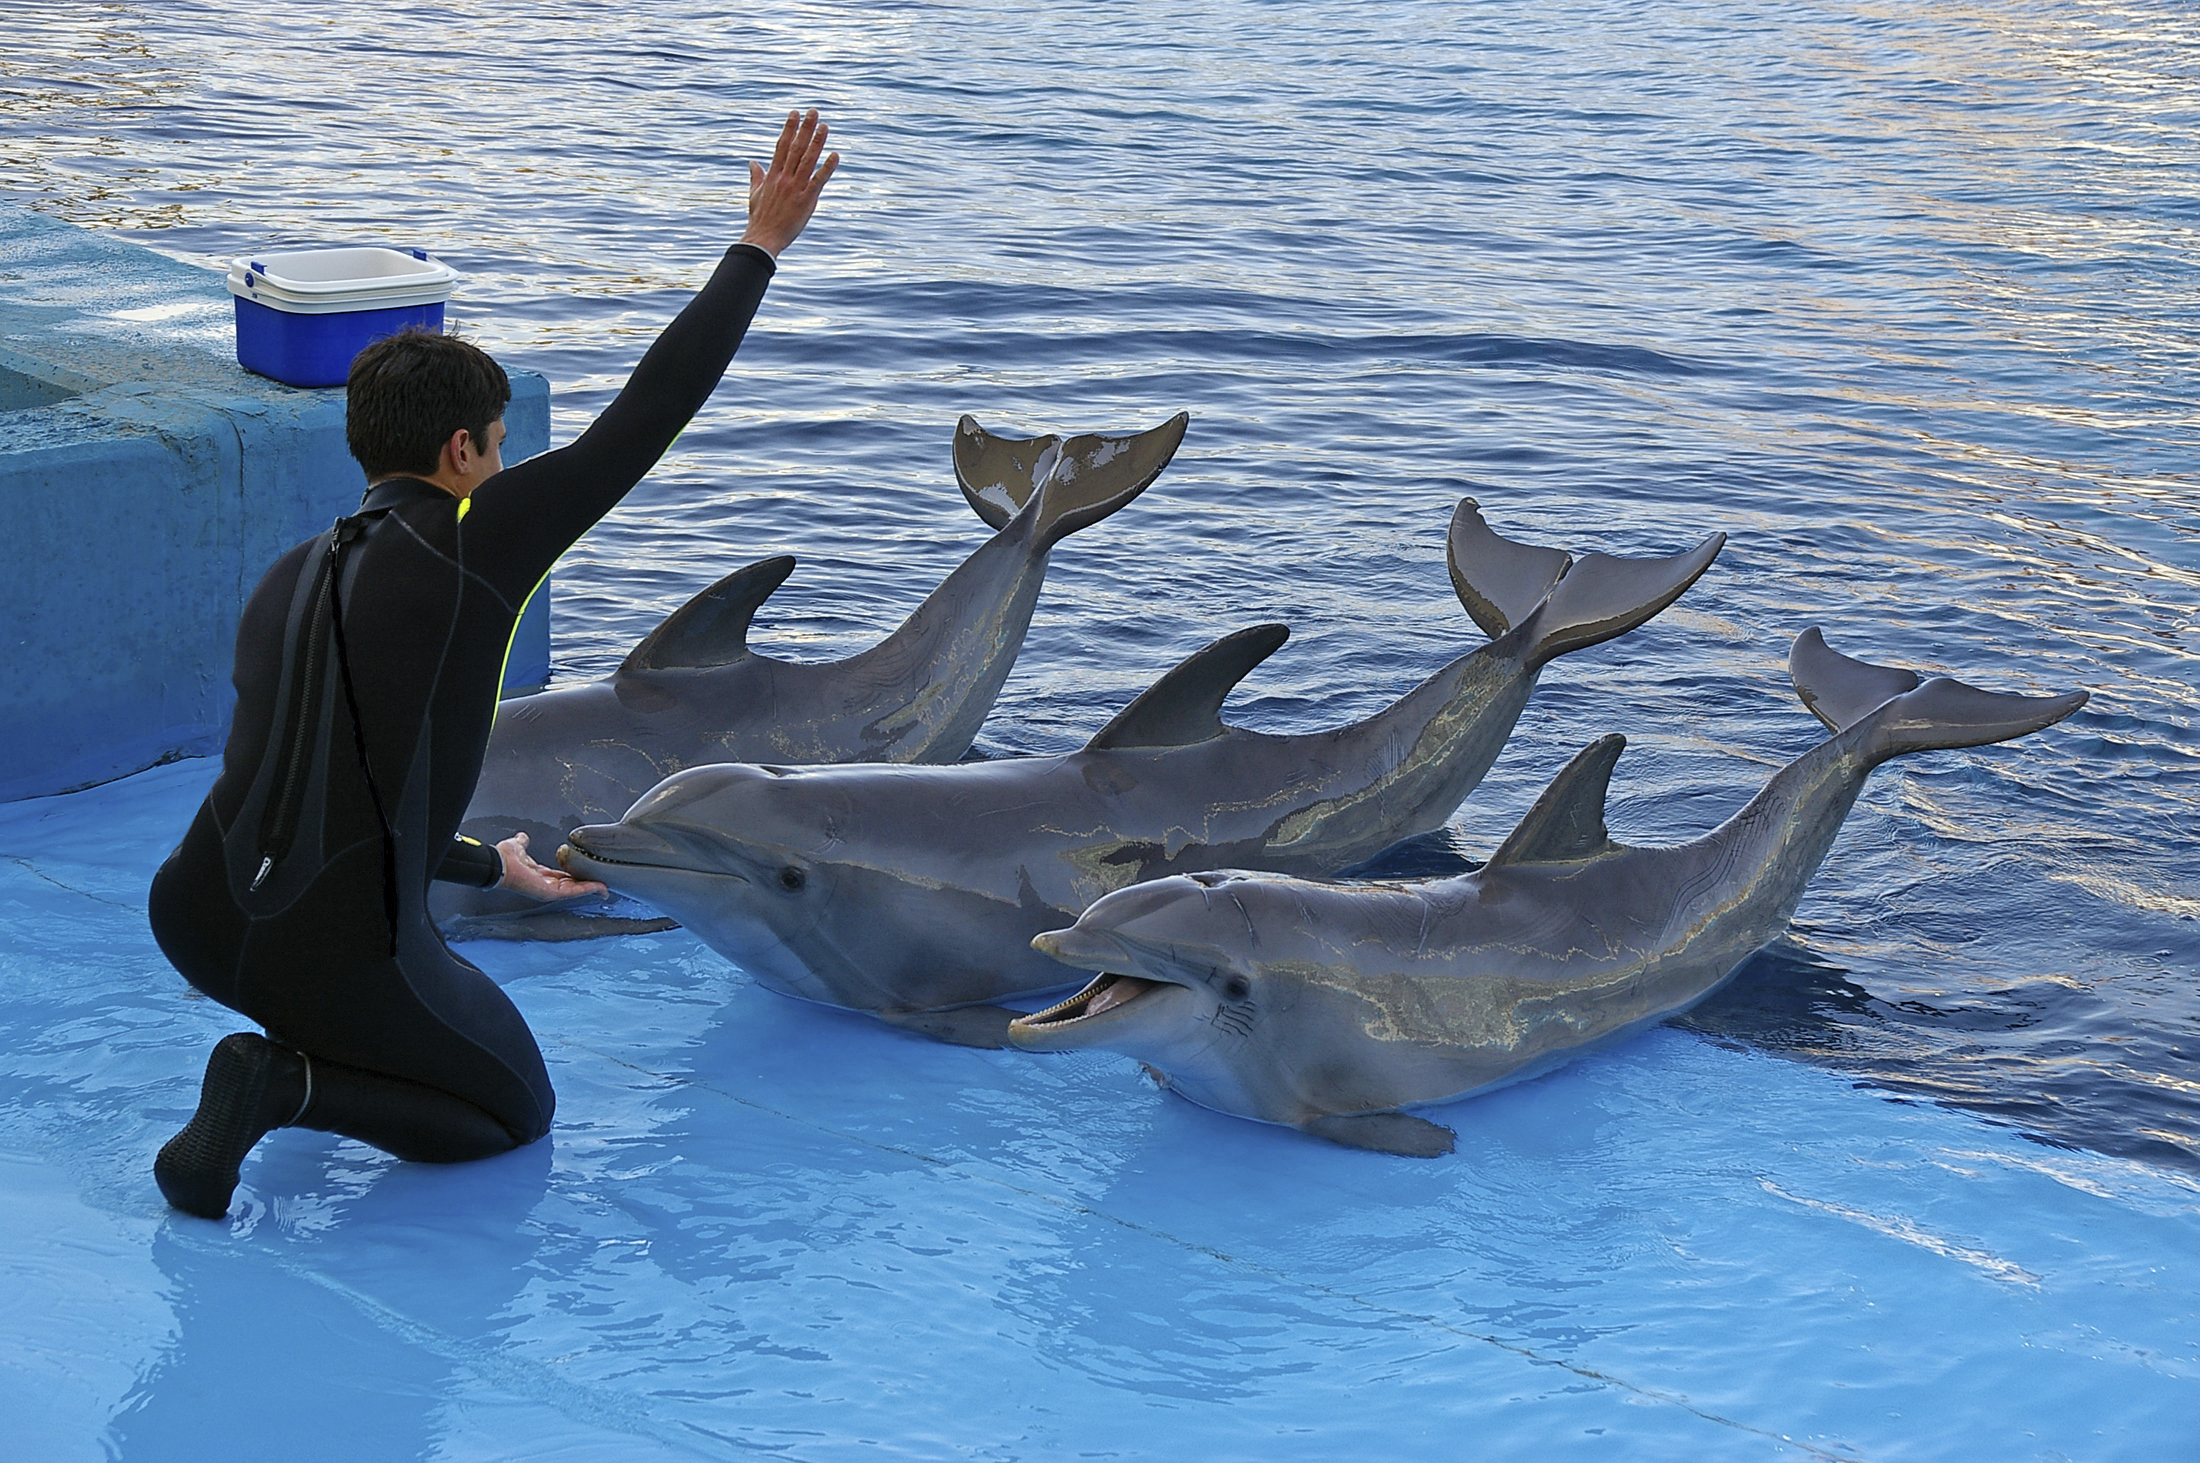 dolphin trainer feeding dolphins